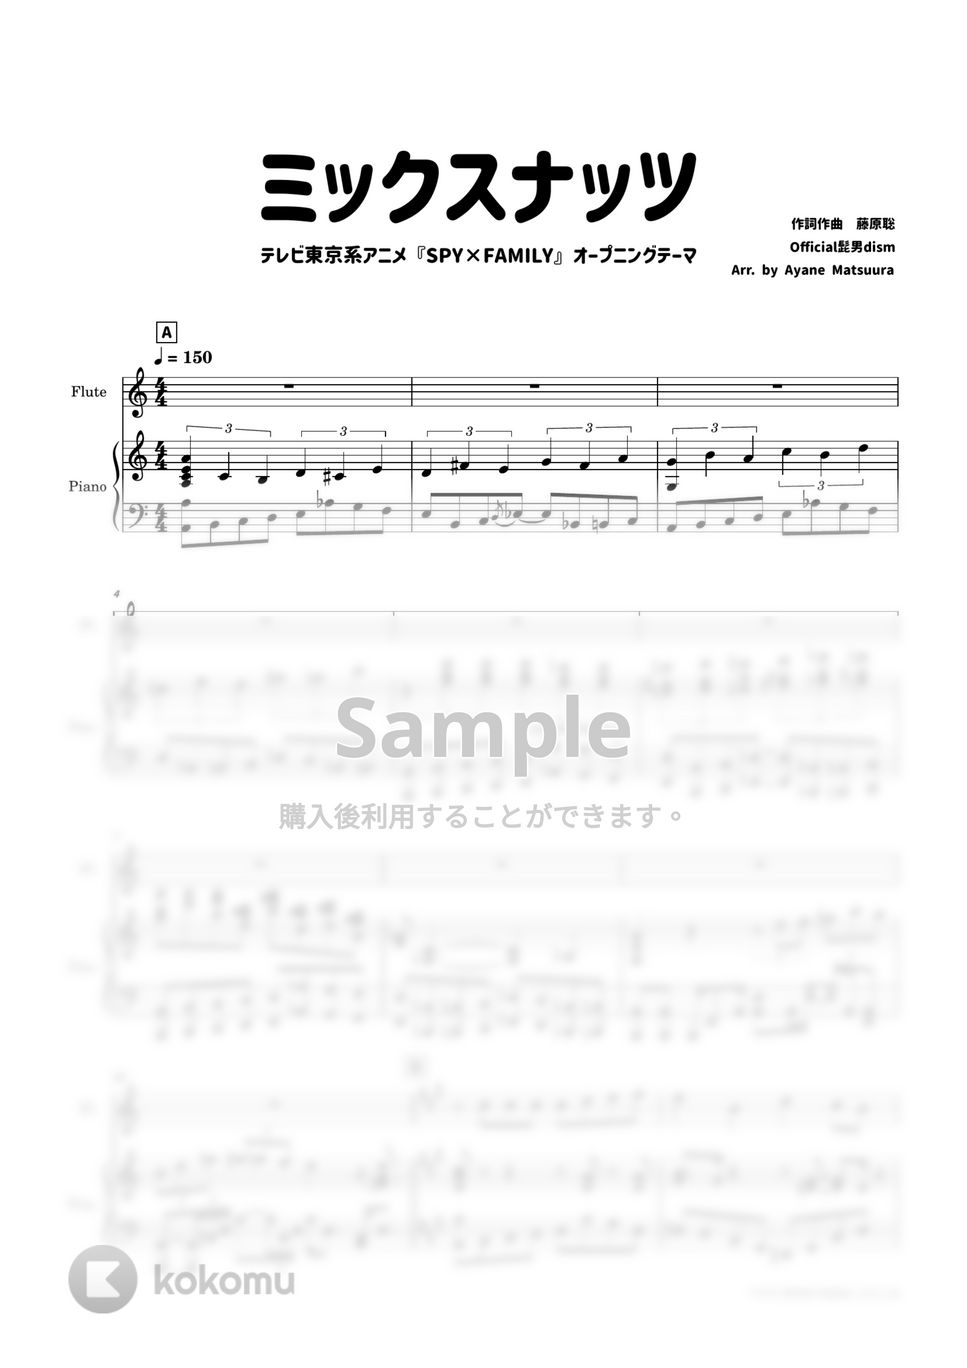 Official髭男dism - 【フルート＆ピアノ】#3＆調号なしミックスナッツ（Official髭男dism） by 管楽器の楽譜★ふるすこあ